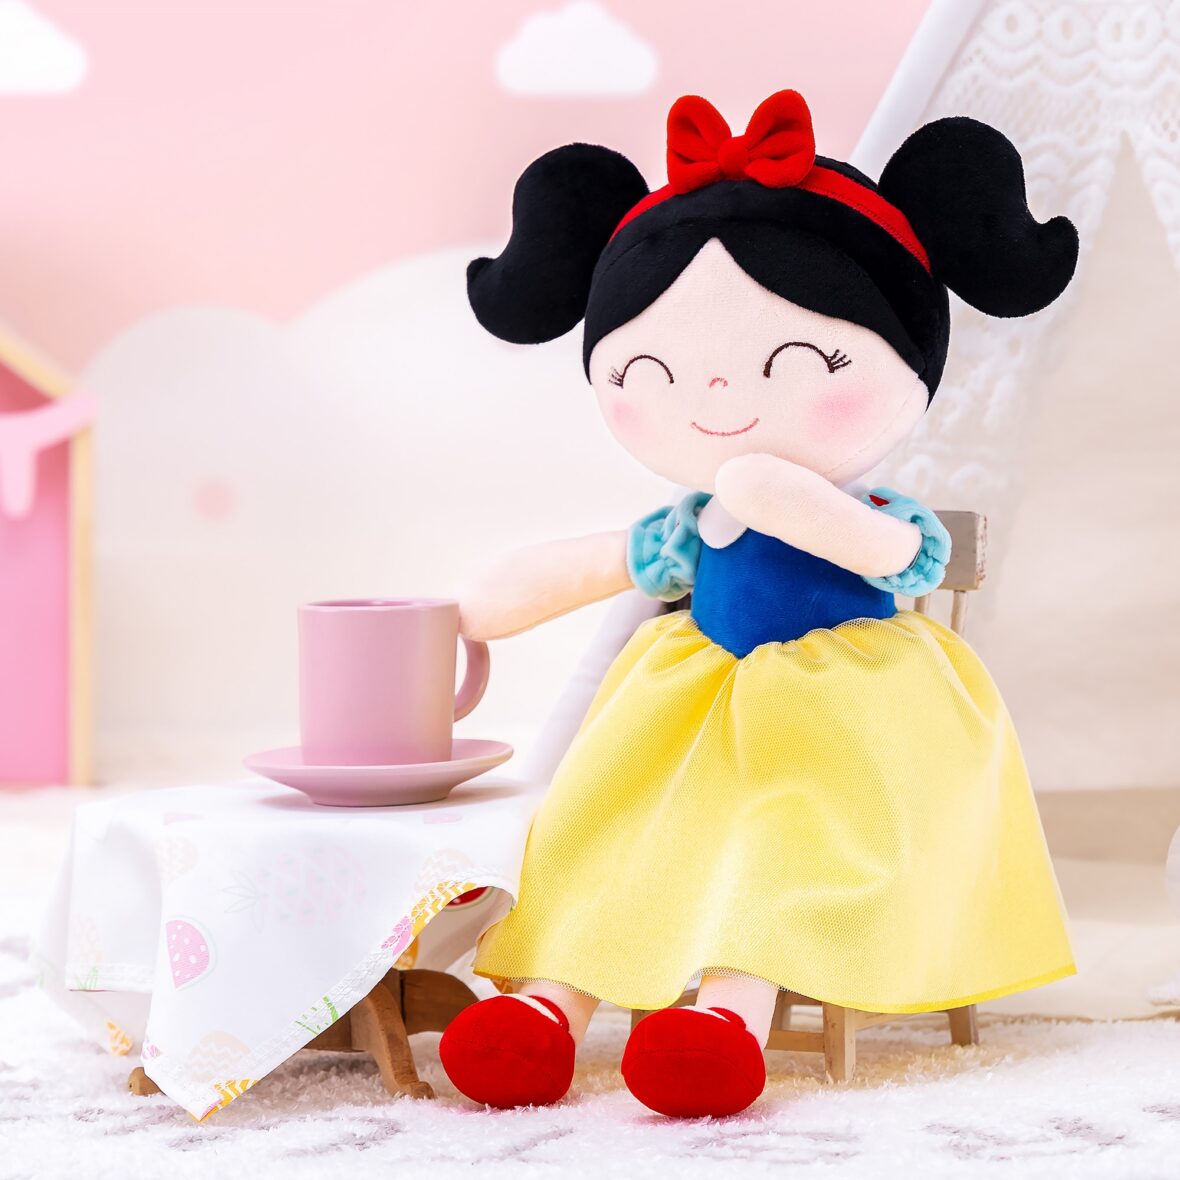 Gloveleya Doll In Snow White Cosplay Soft Stuffed Plush Toy